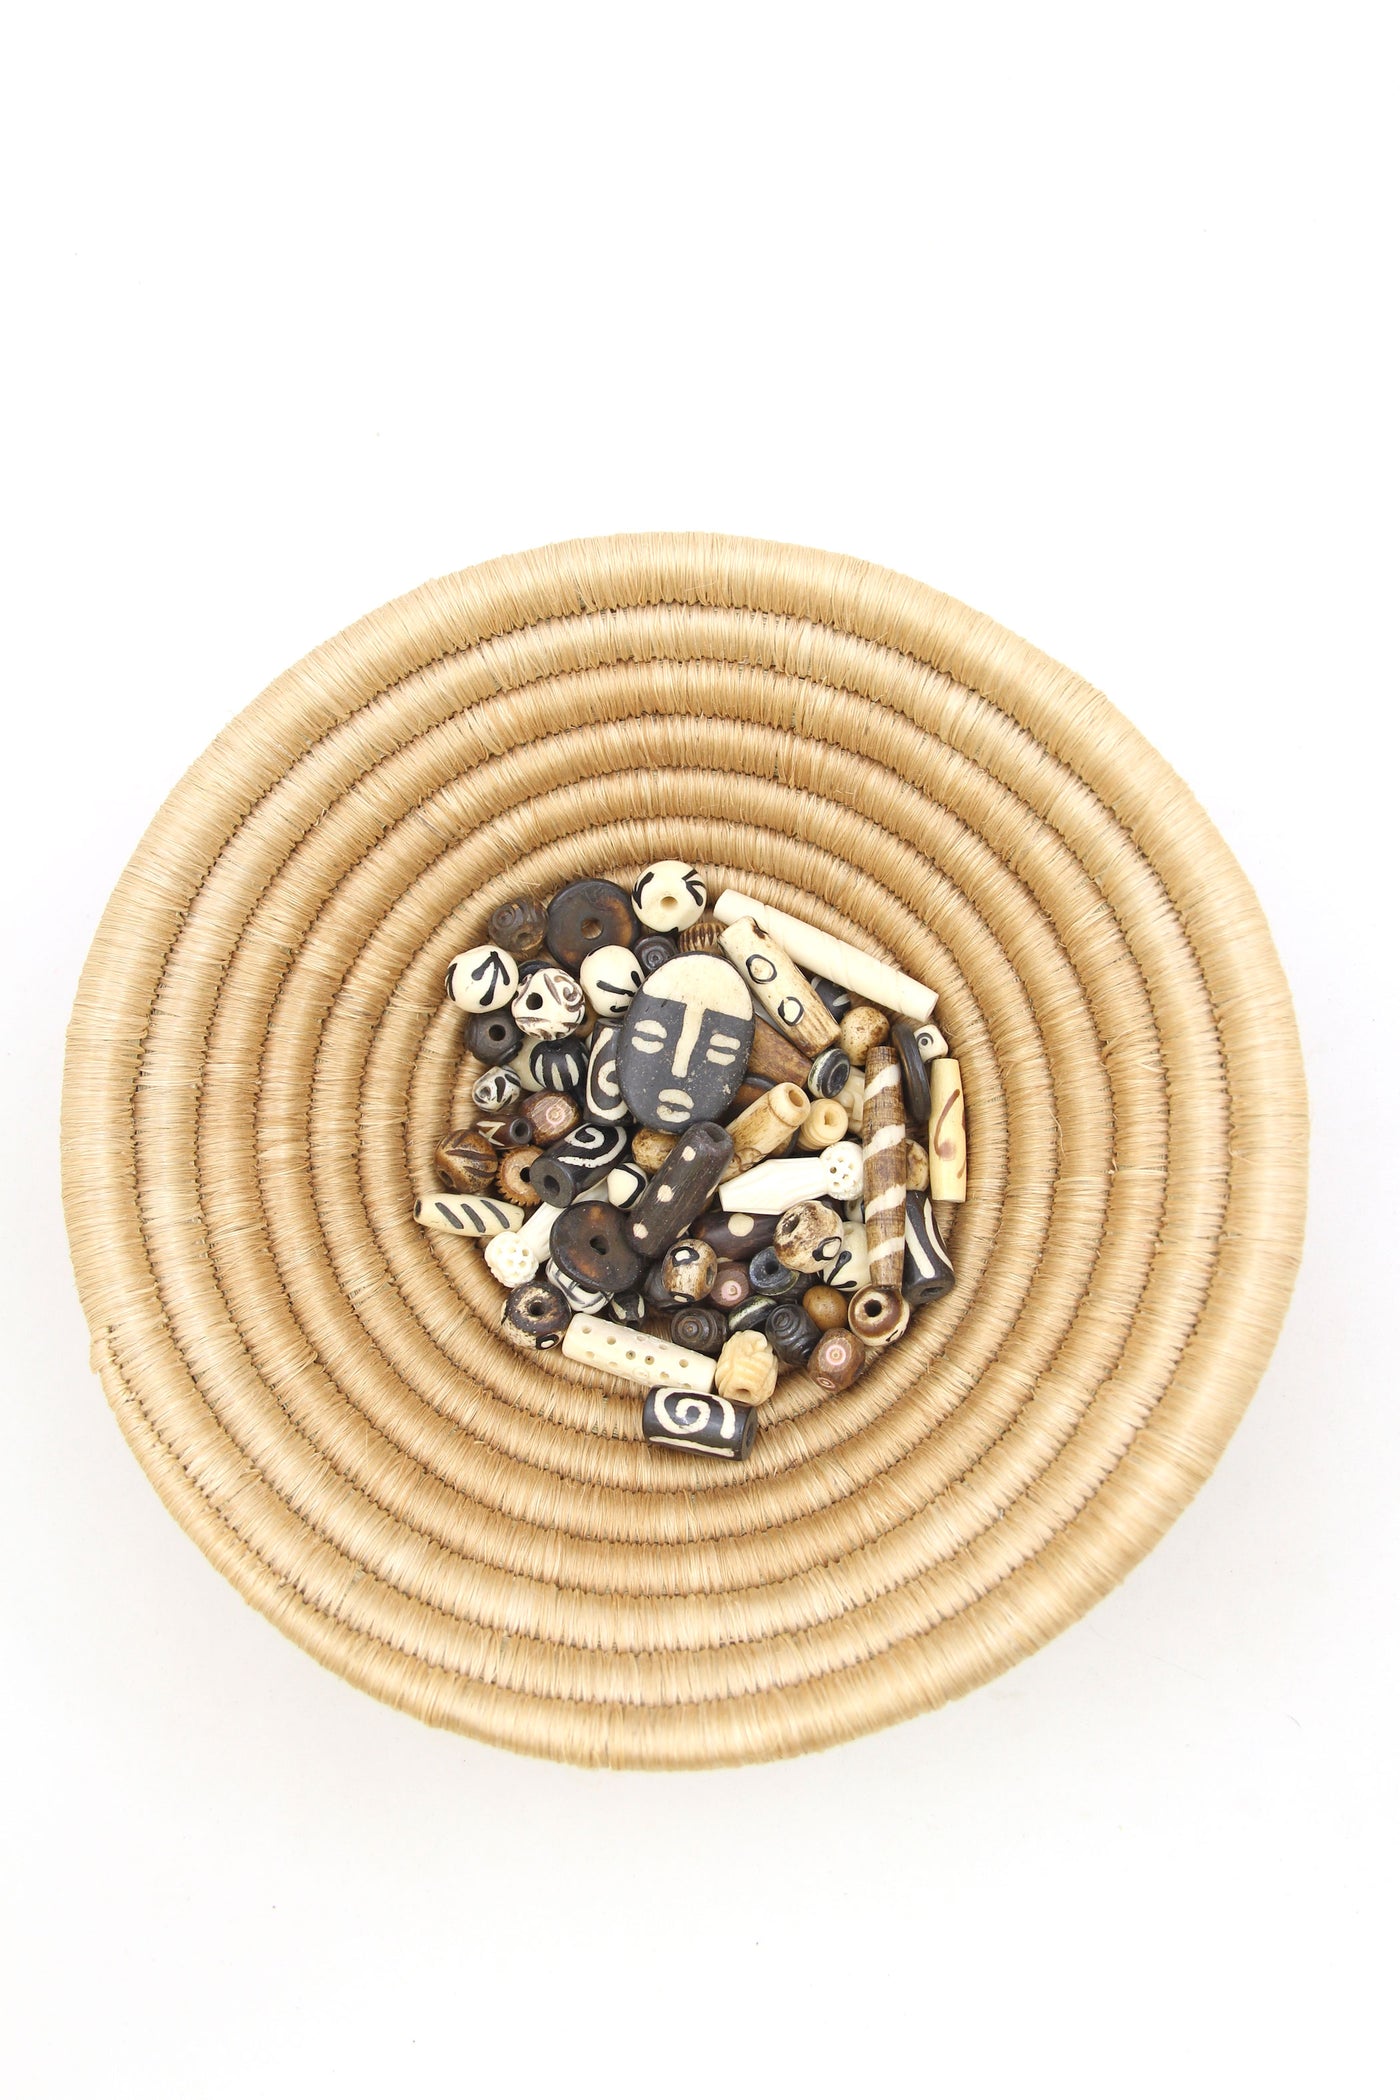 Neutral Globetrotter Gift Set: Bead Grab Bag, Handwoven Tan Basket, Table Decor